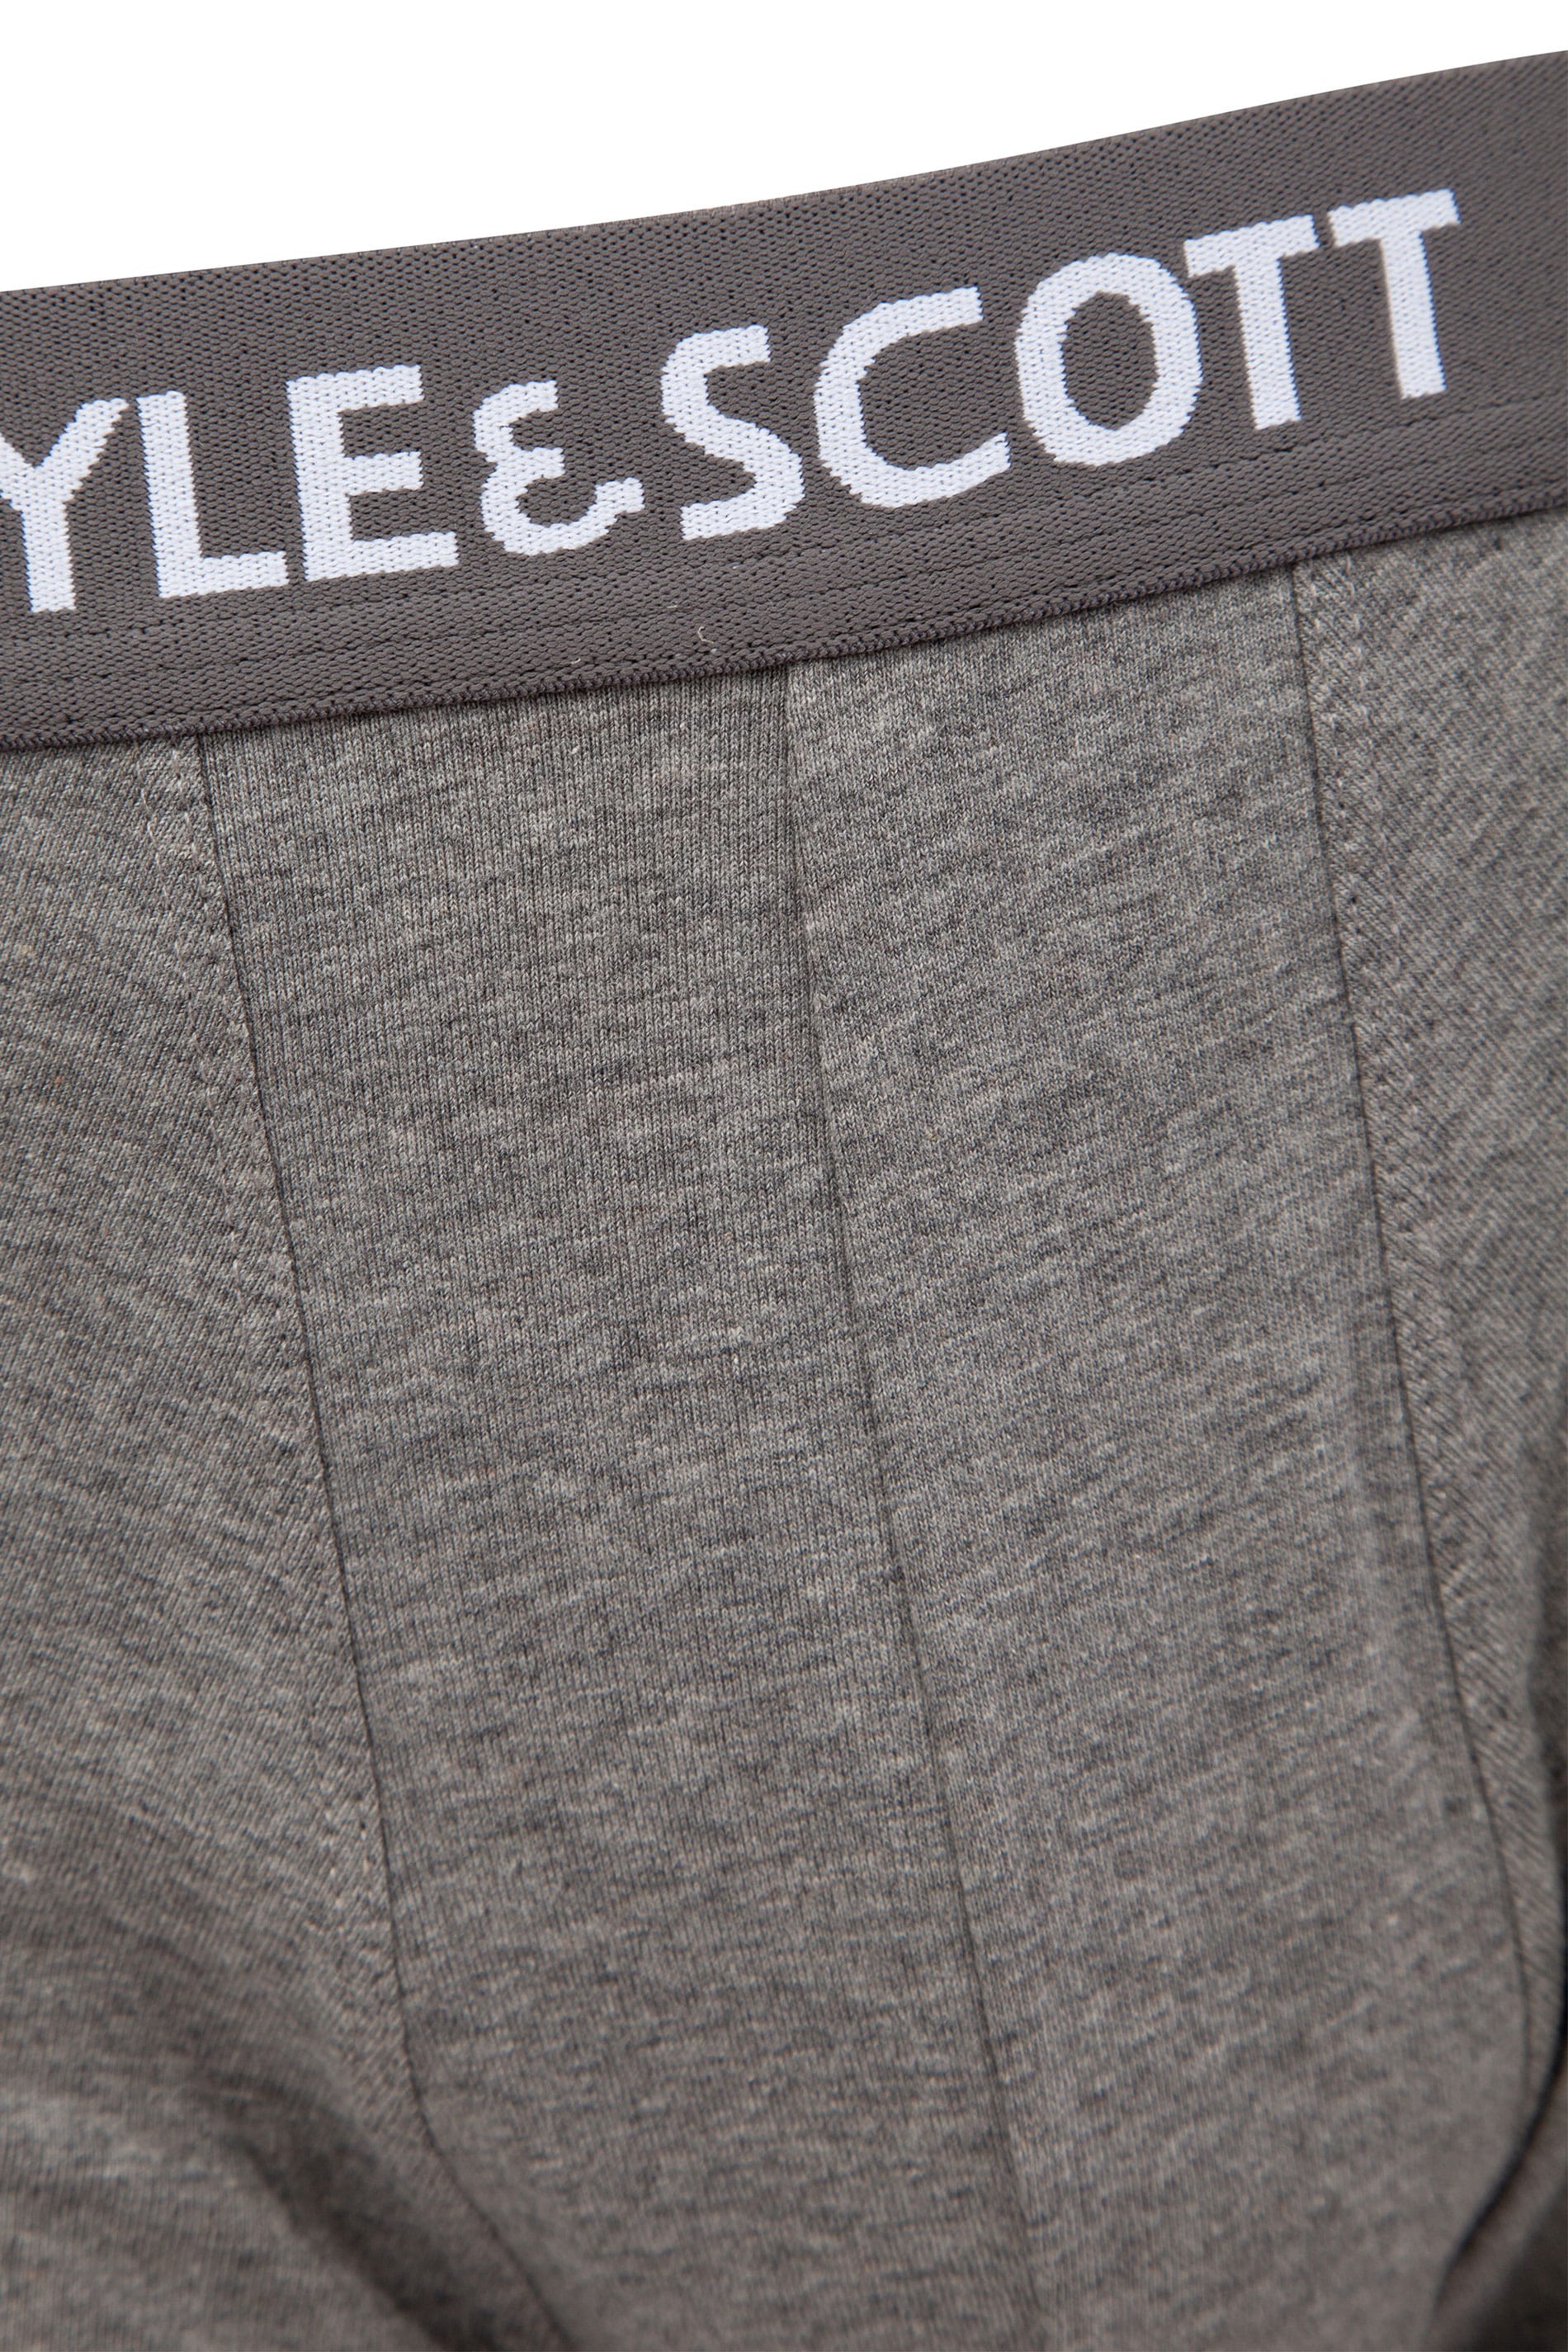 Buy Lyle And Scott Jonathan Premium Underwear Trunks 3 Pack from Next USA